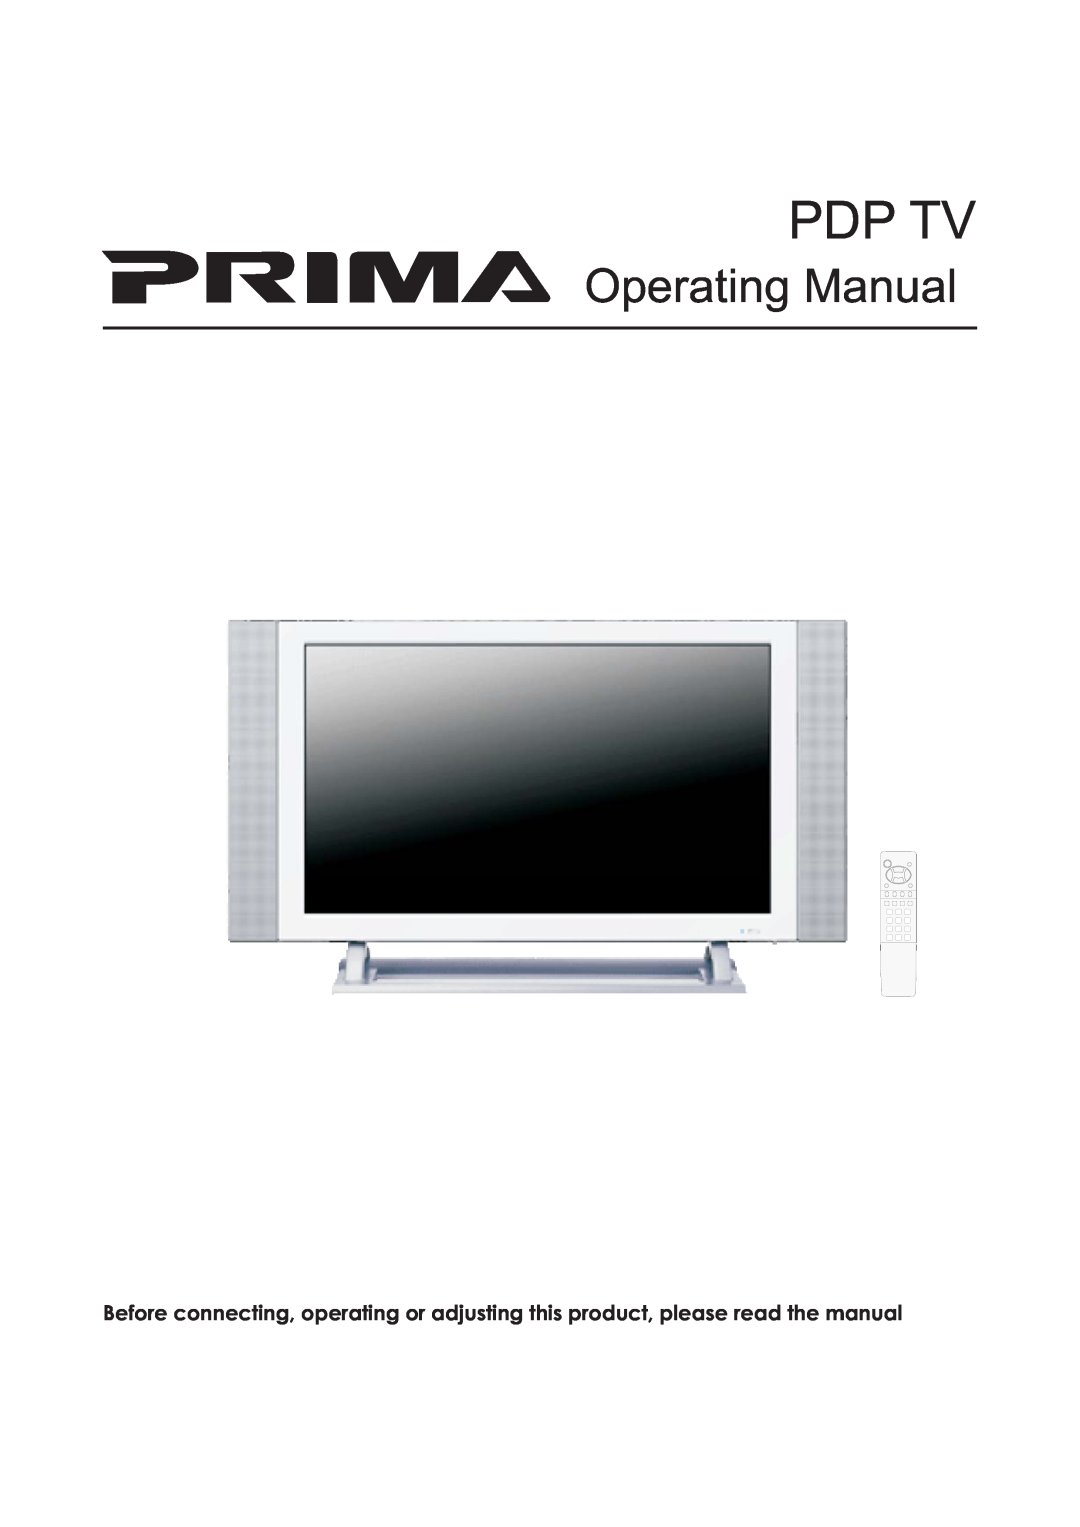 Primate Systems PDP TV manual Pdp Tv, Operating Manual 